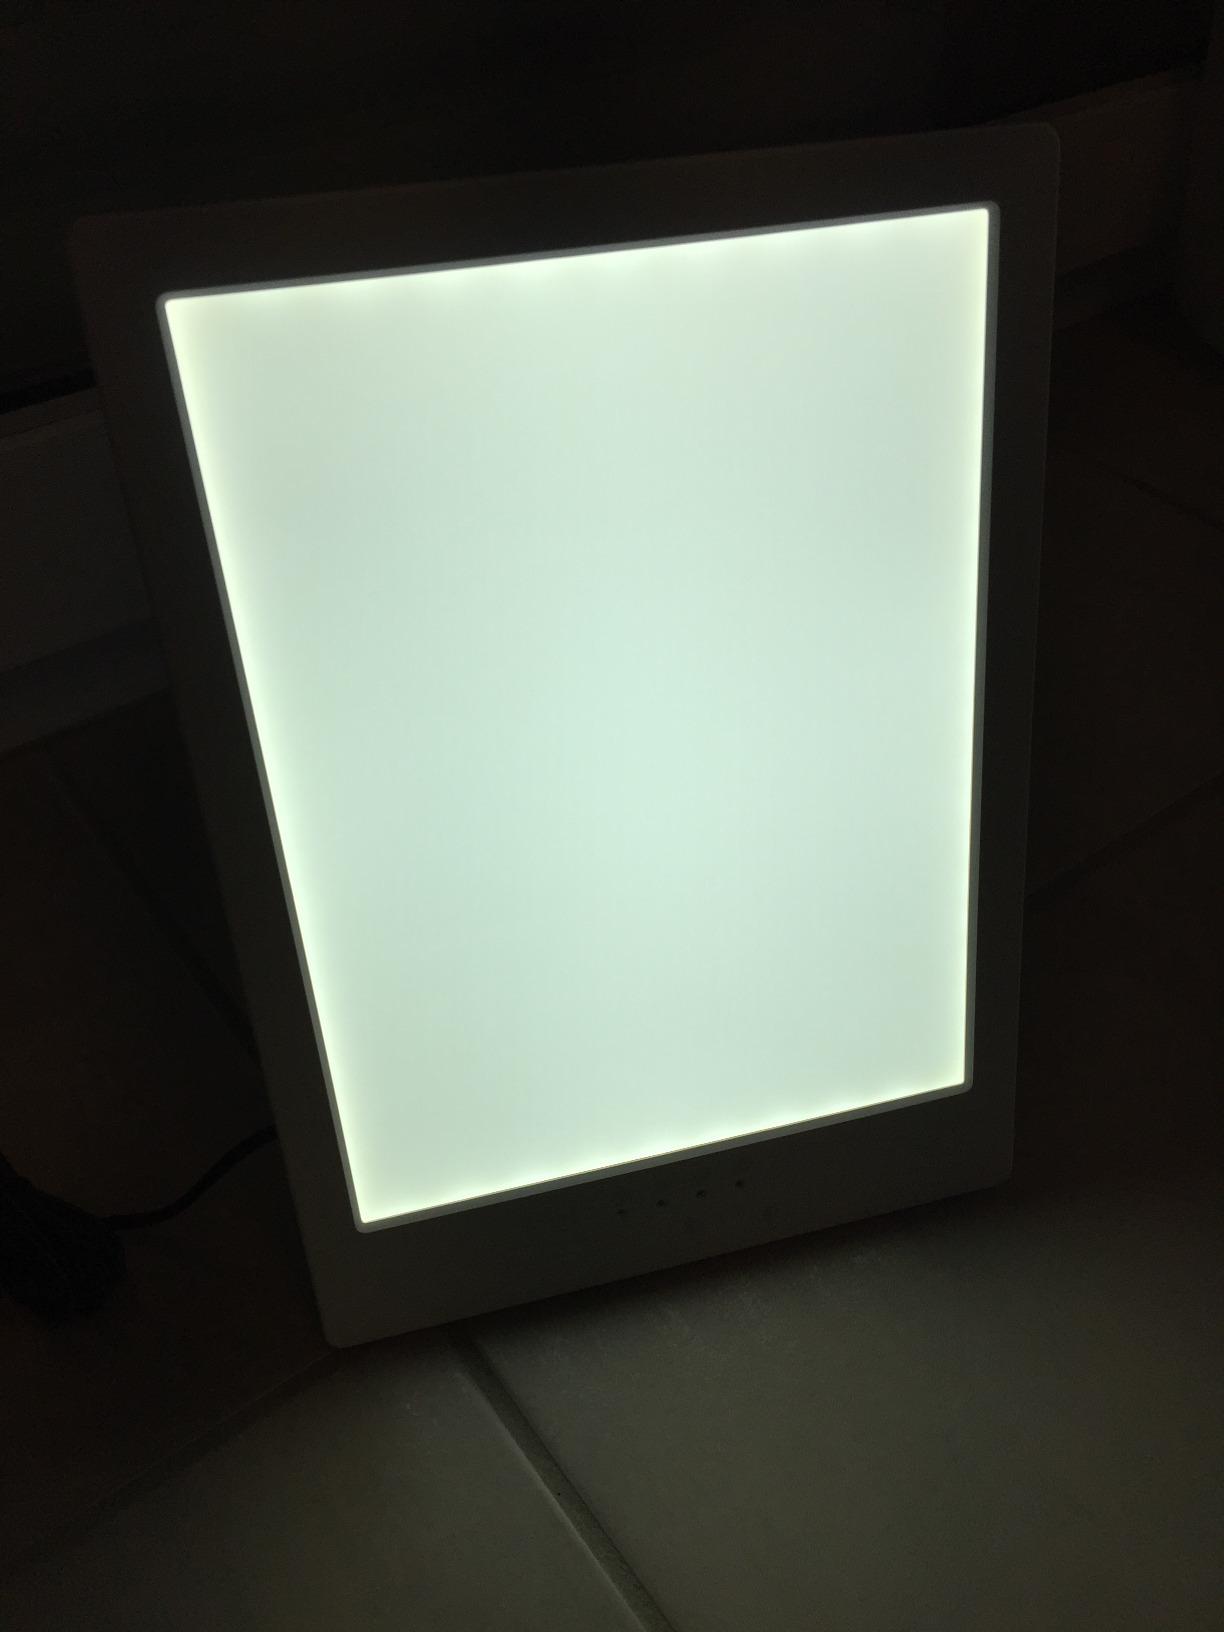 Premium Light Therapy Sunlight Sad Lamp Box photo review